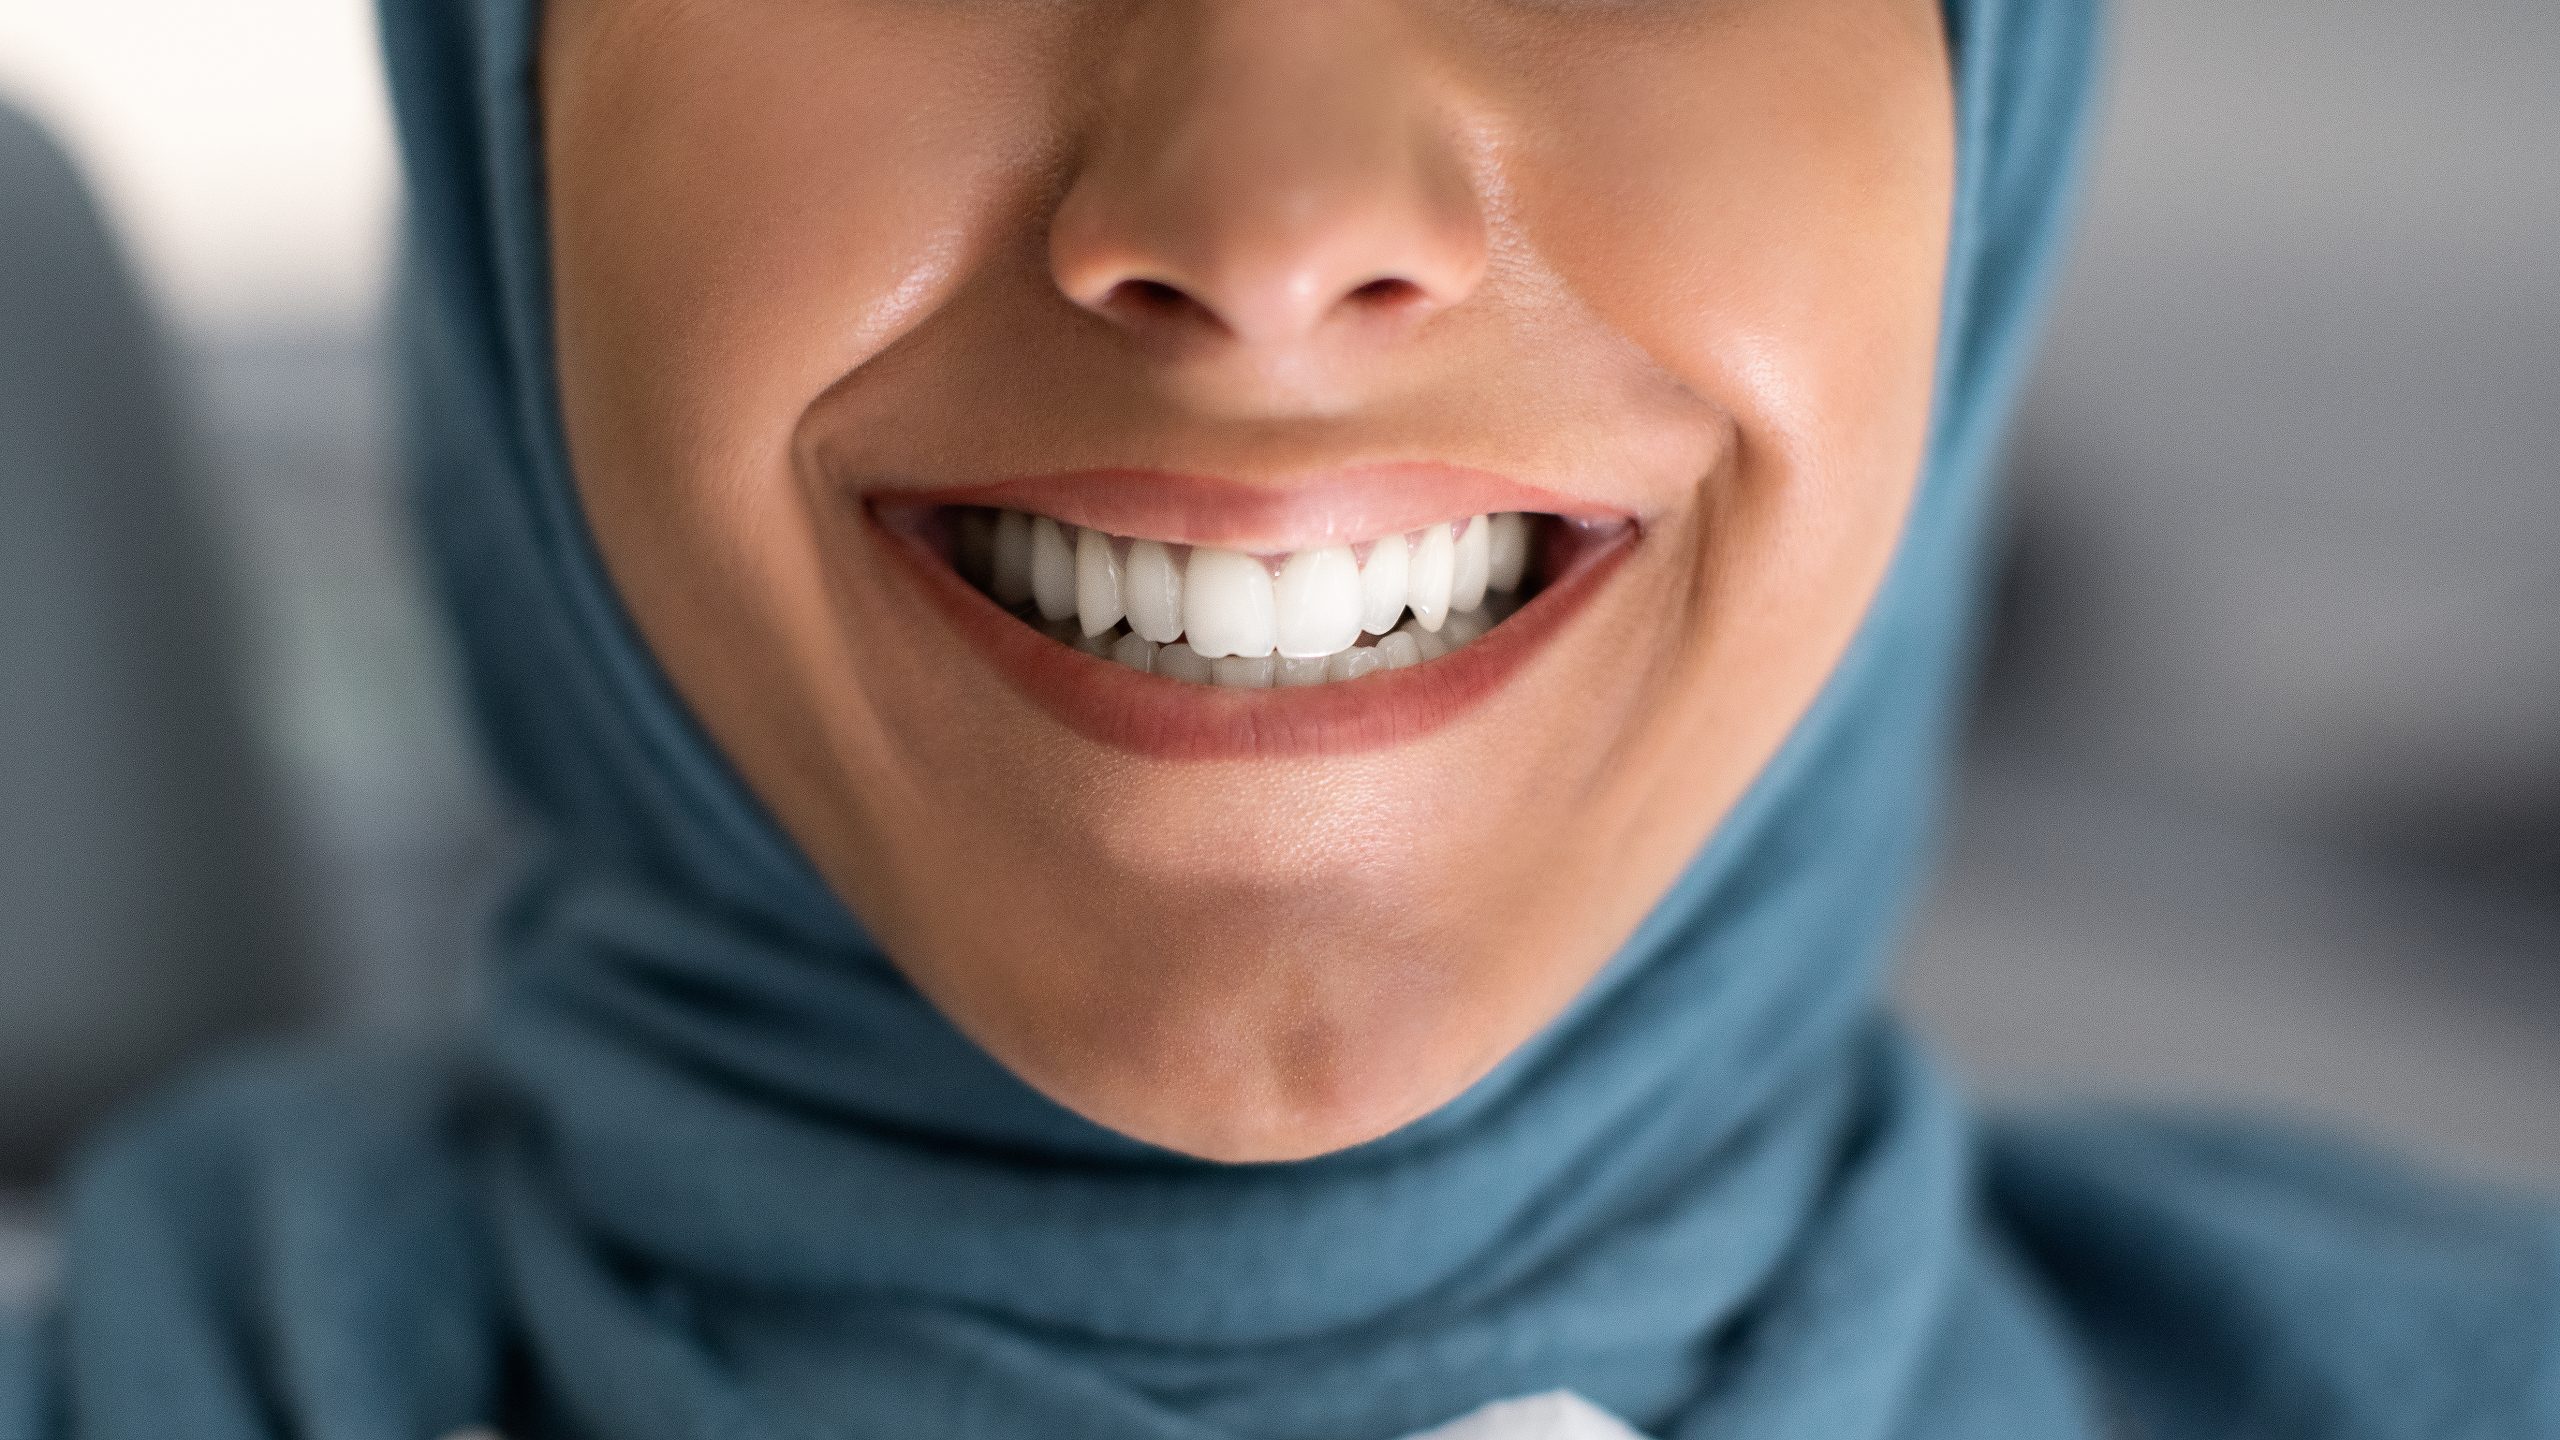 Teeth health: The fruit that may naturally help whiten teeth